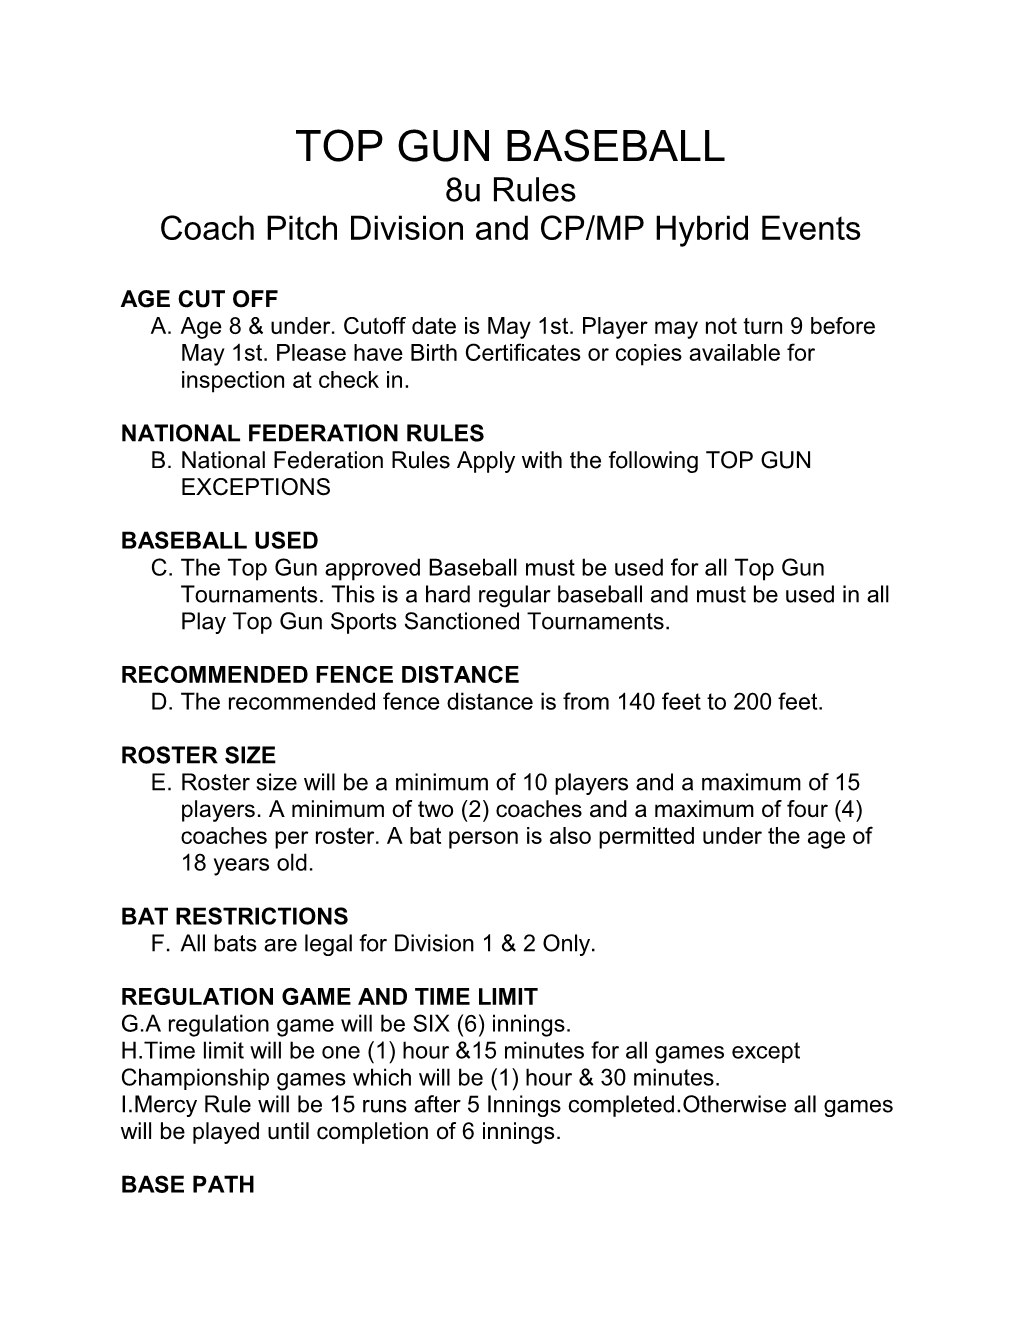 TOP GUN BASEBALL 8U Rules Coach Pitch Division and CP/MP Hybrid Events